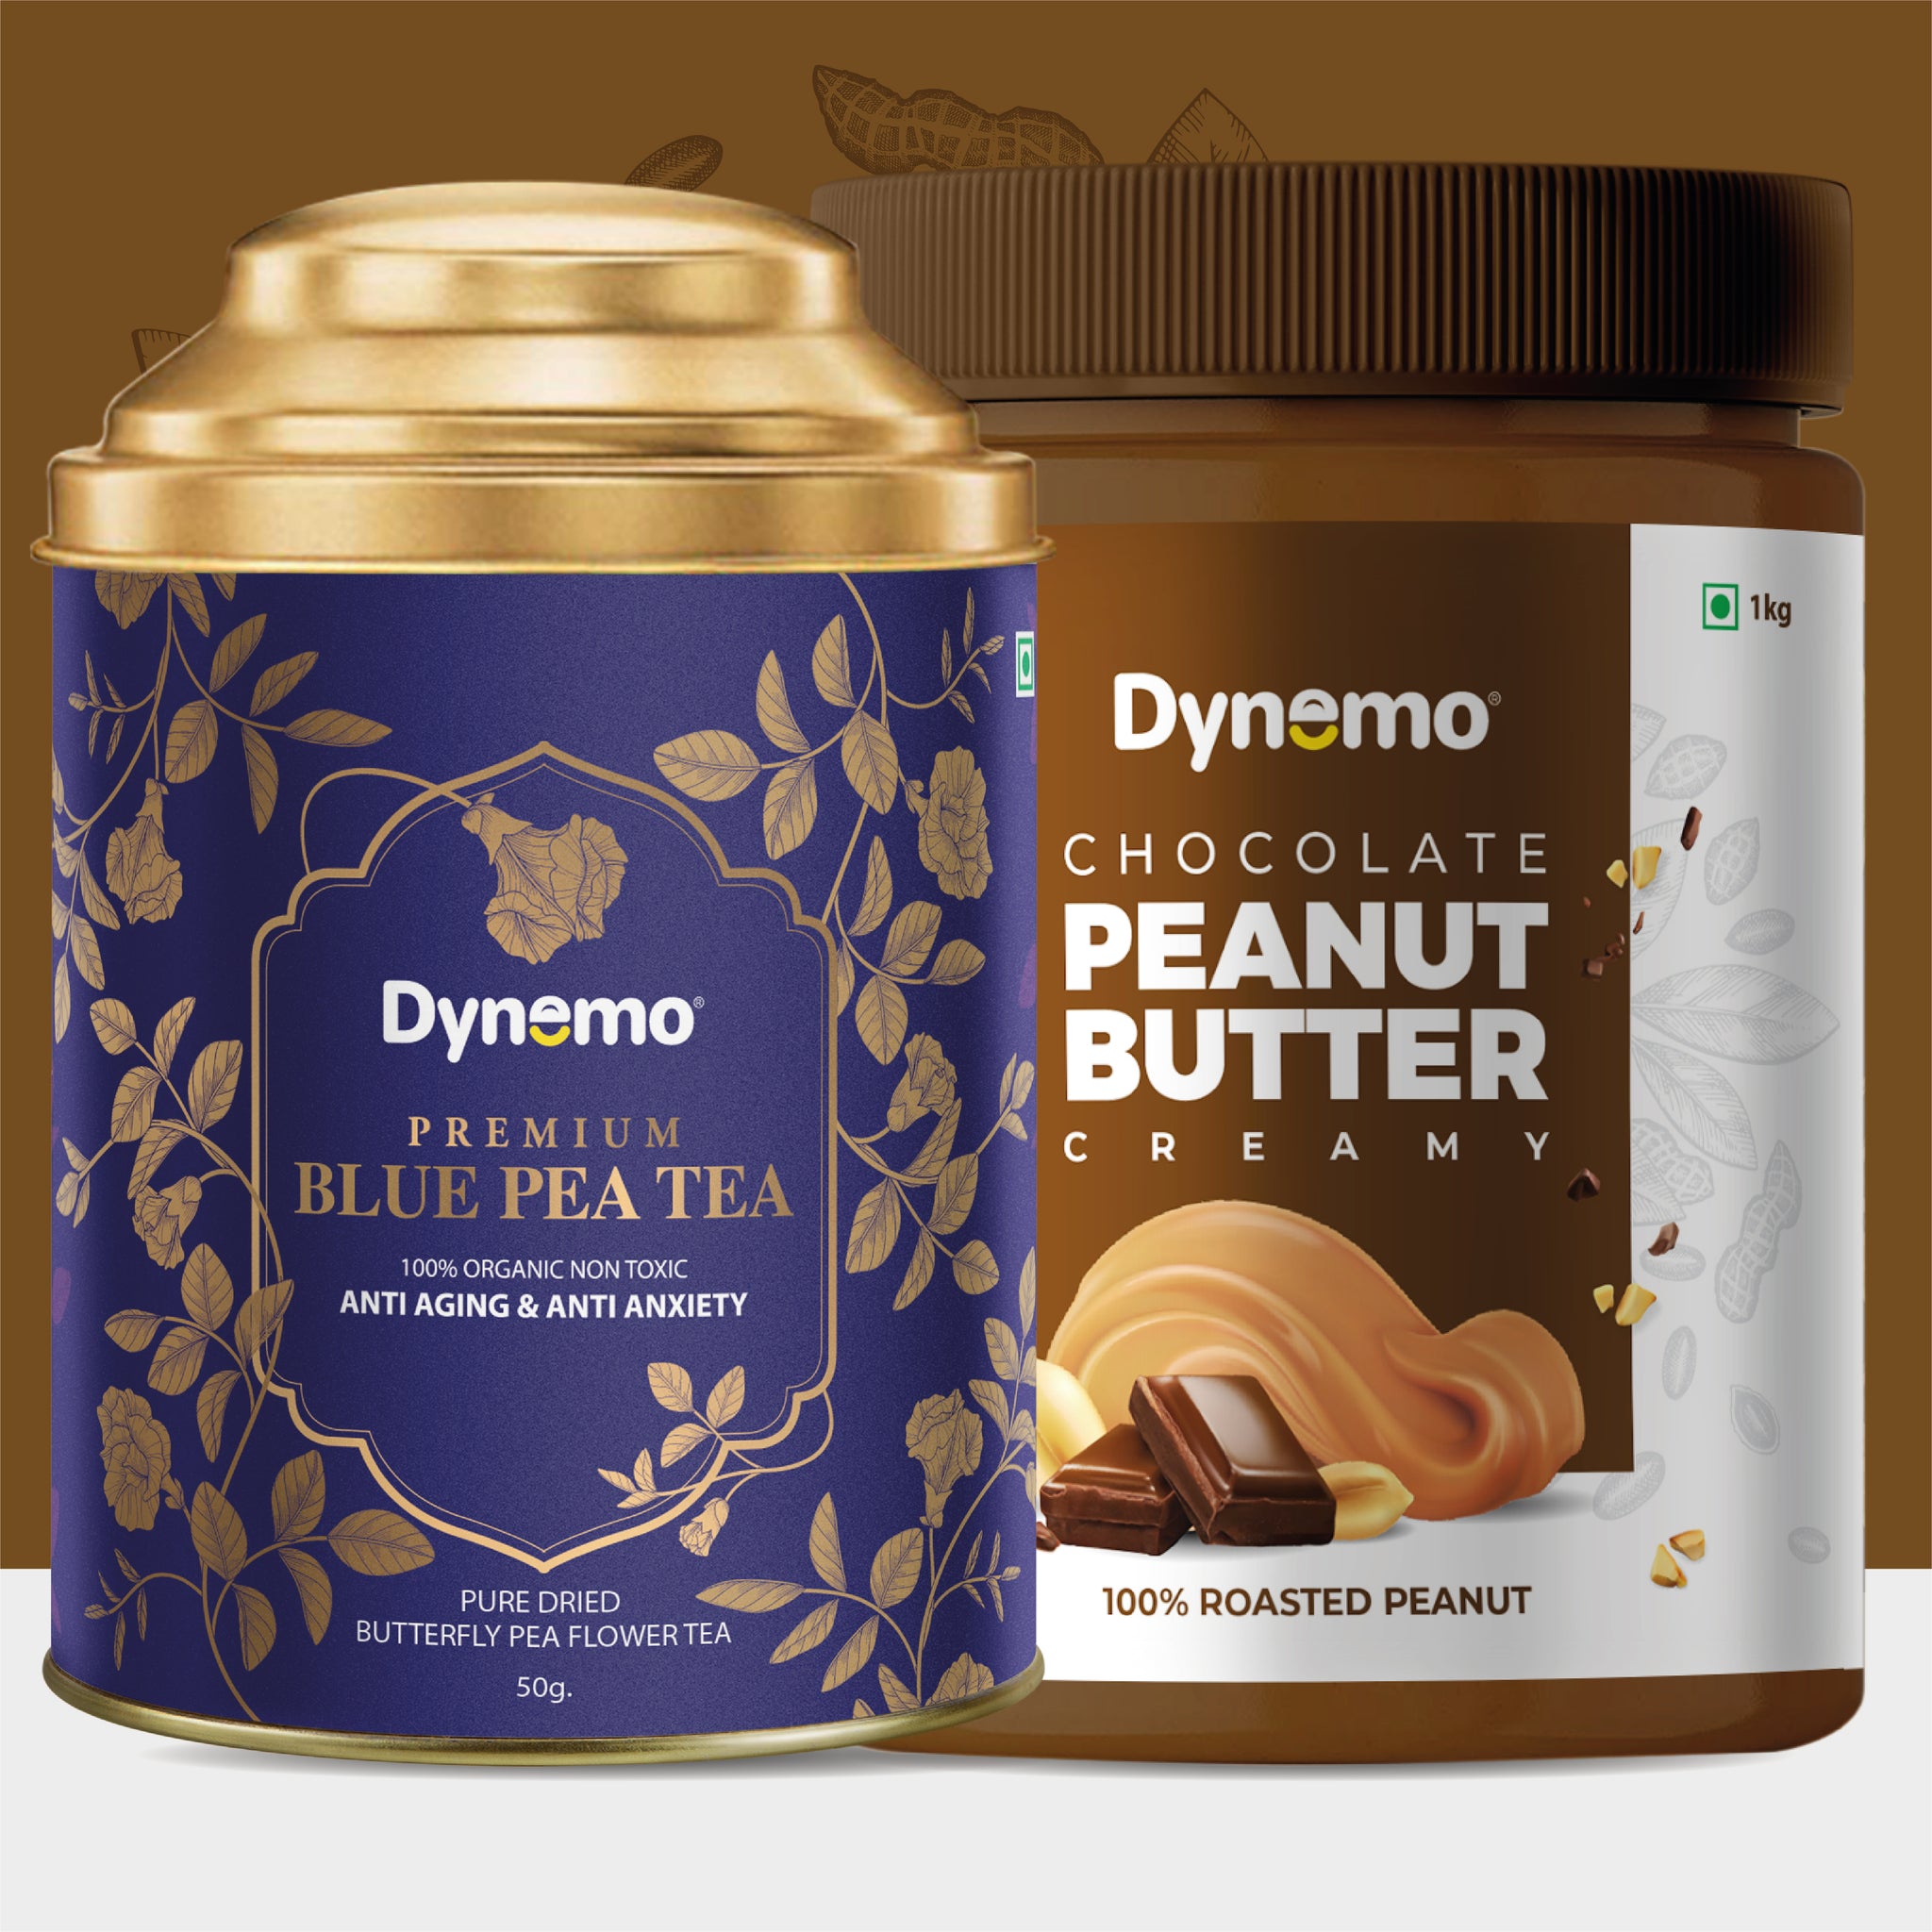 Dynemo Chocolate CREAMY Peanut Butter 1KG + Dynemo Blue Pea tea 50g.